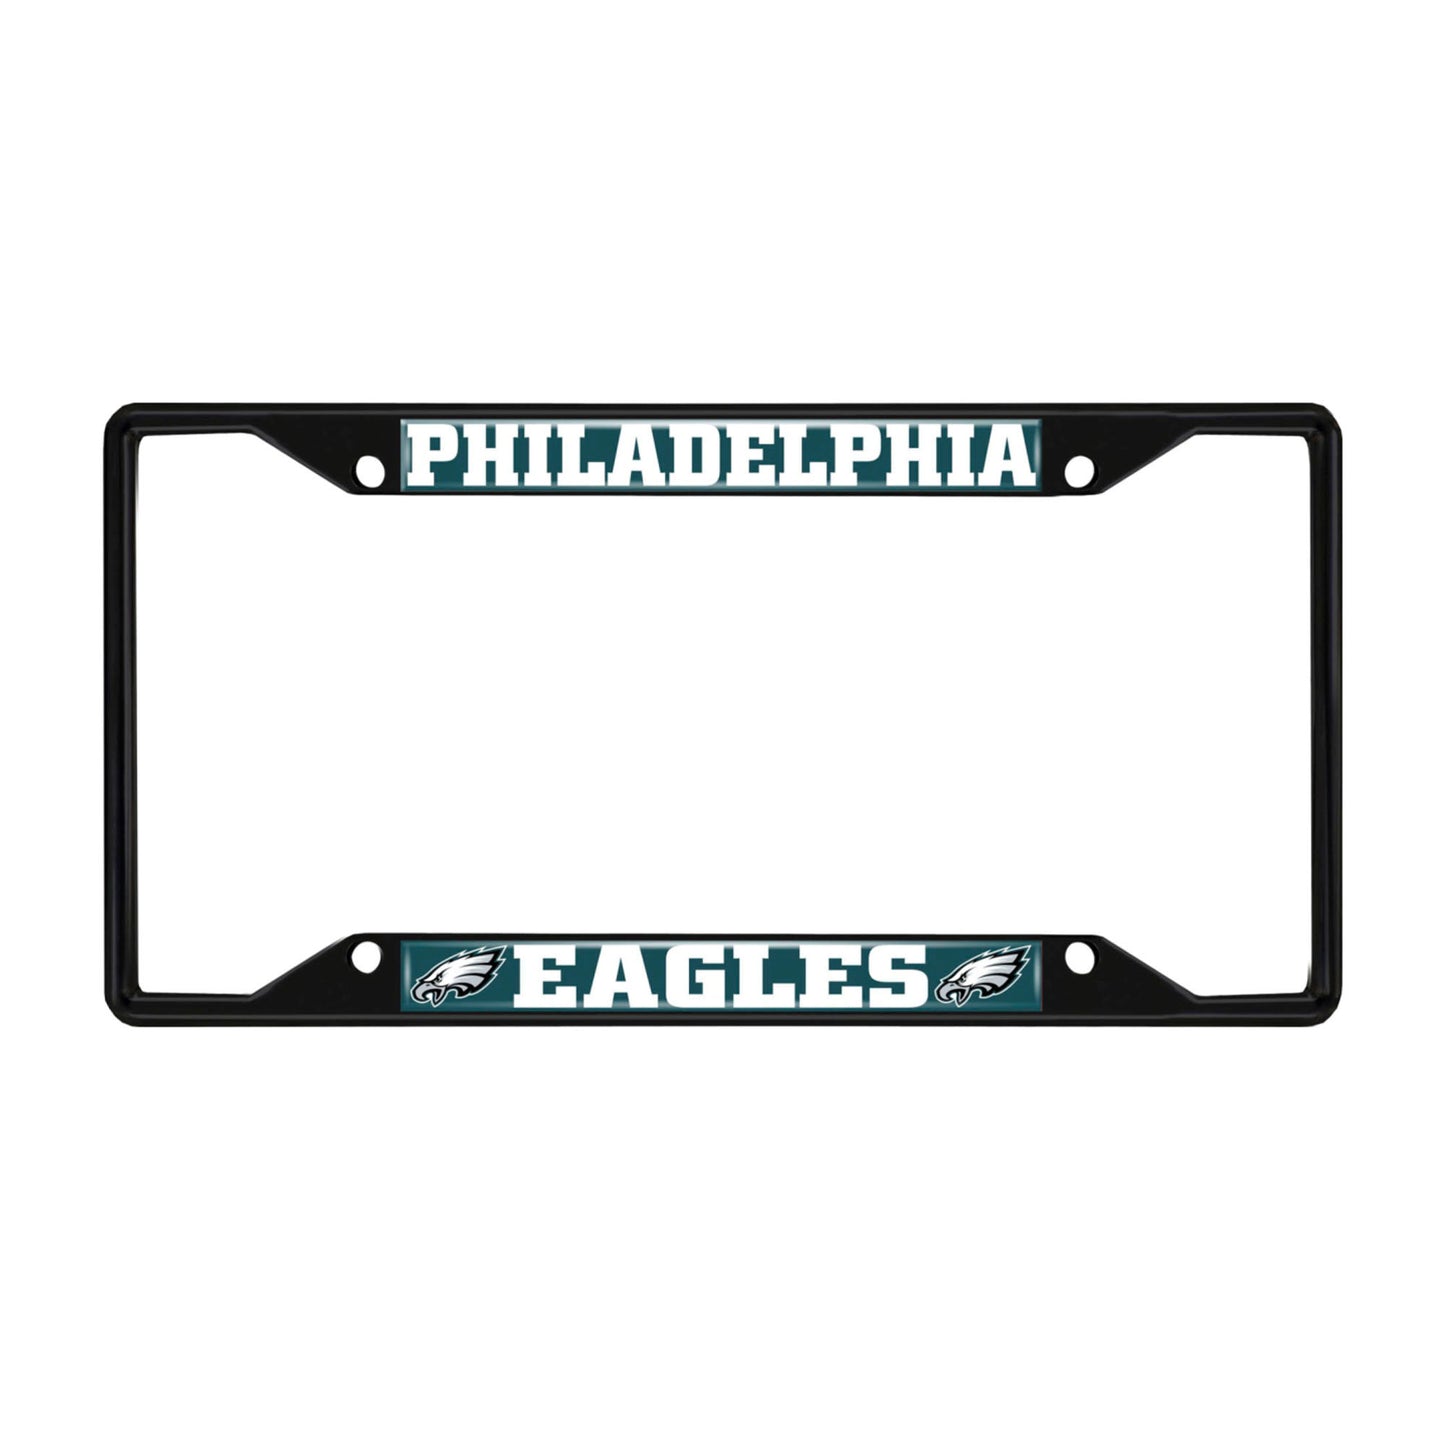 Philadelphia Eagles Metal License Plate Frame Black Finish